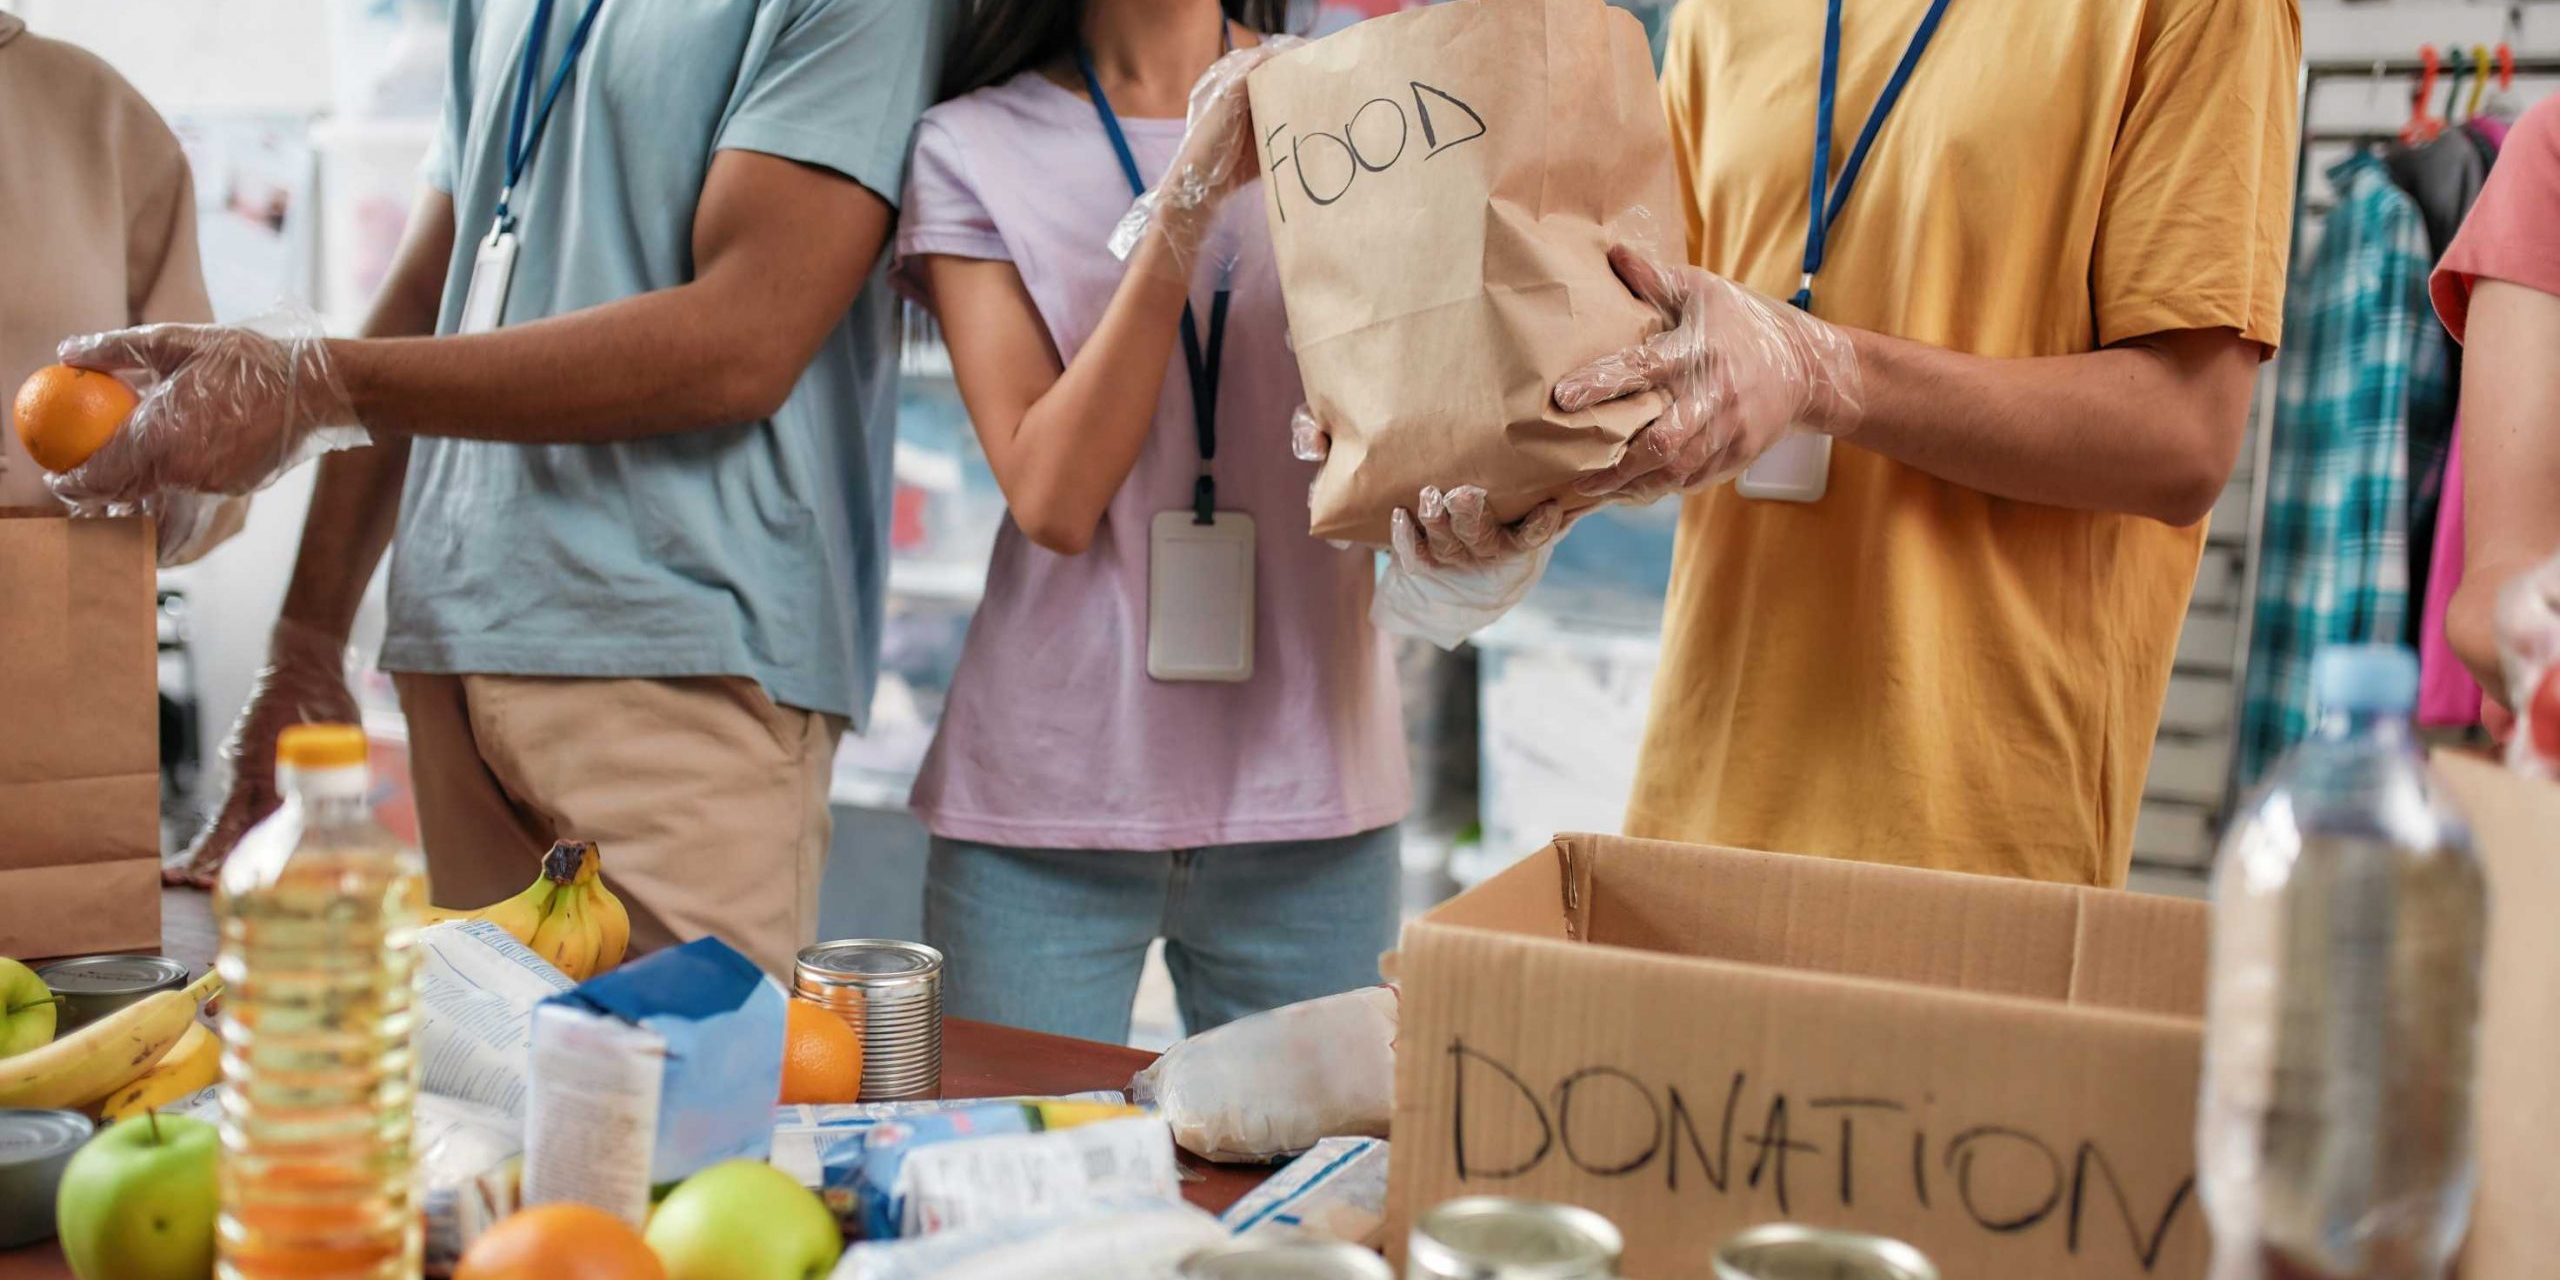 donating food